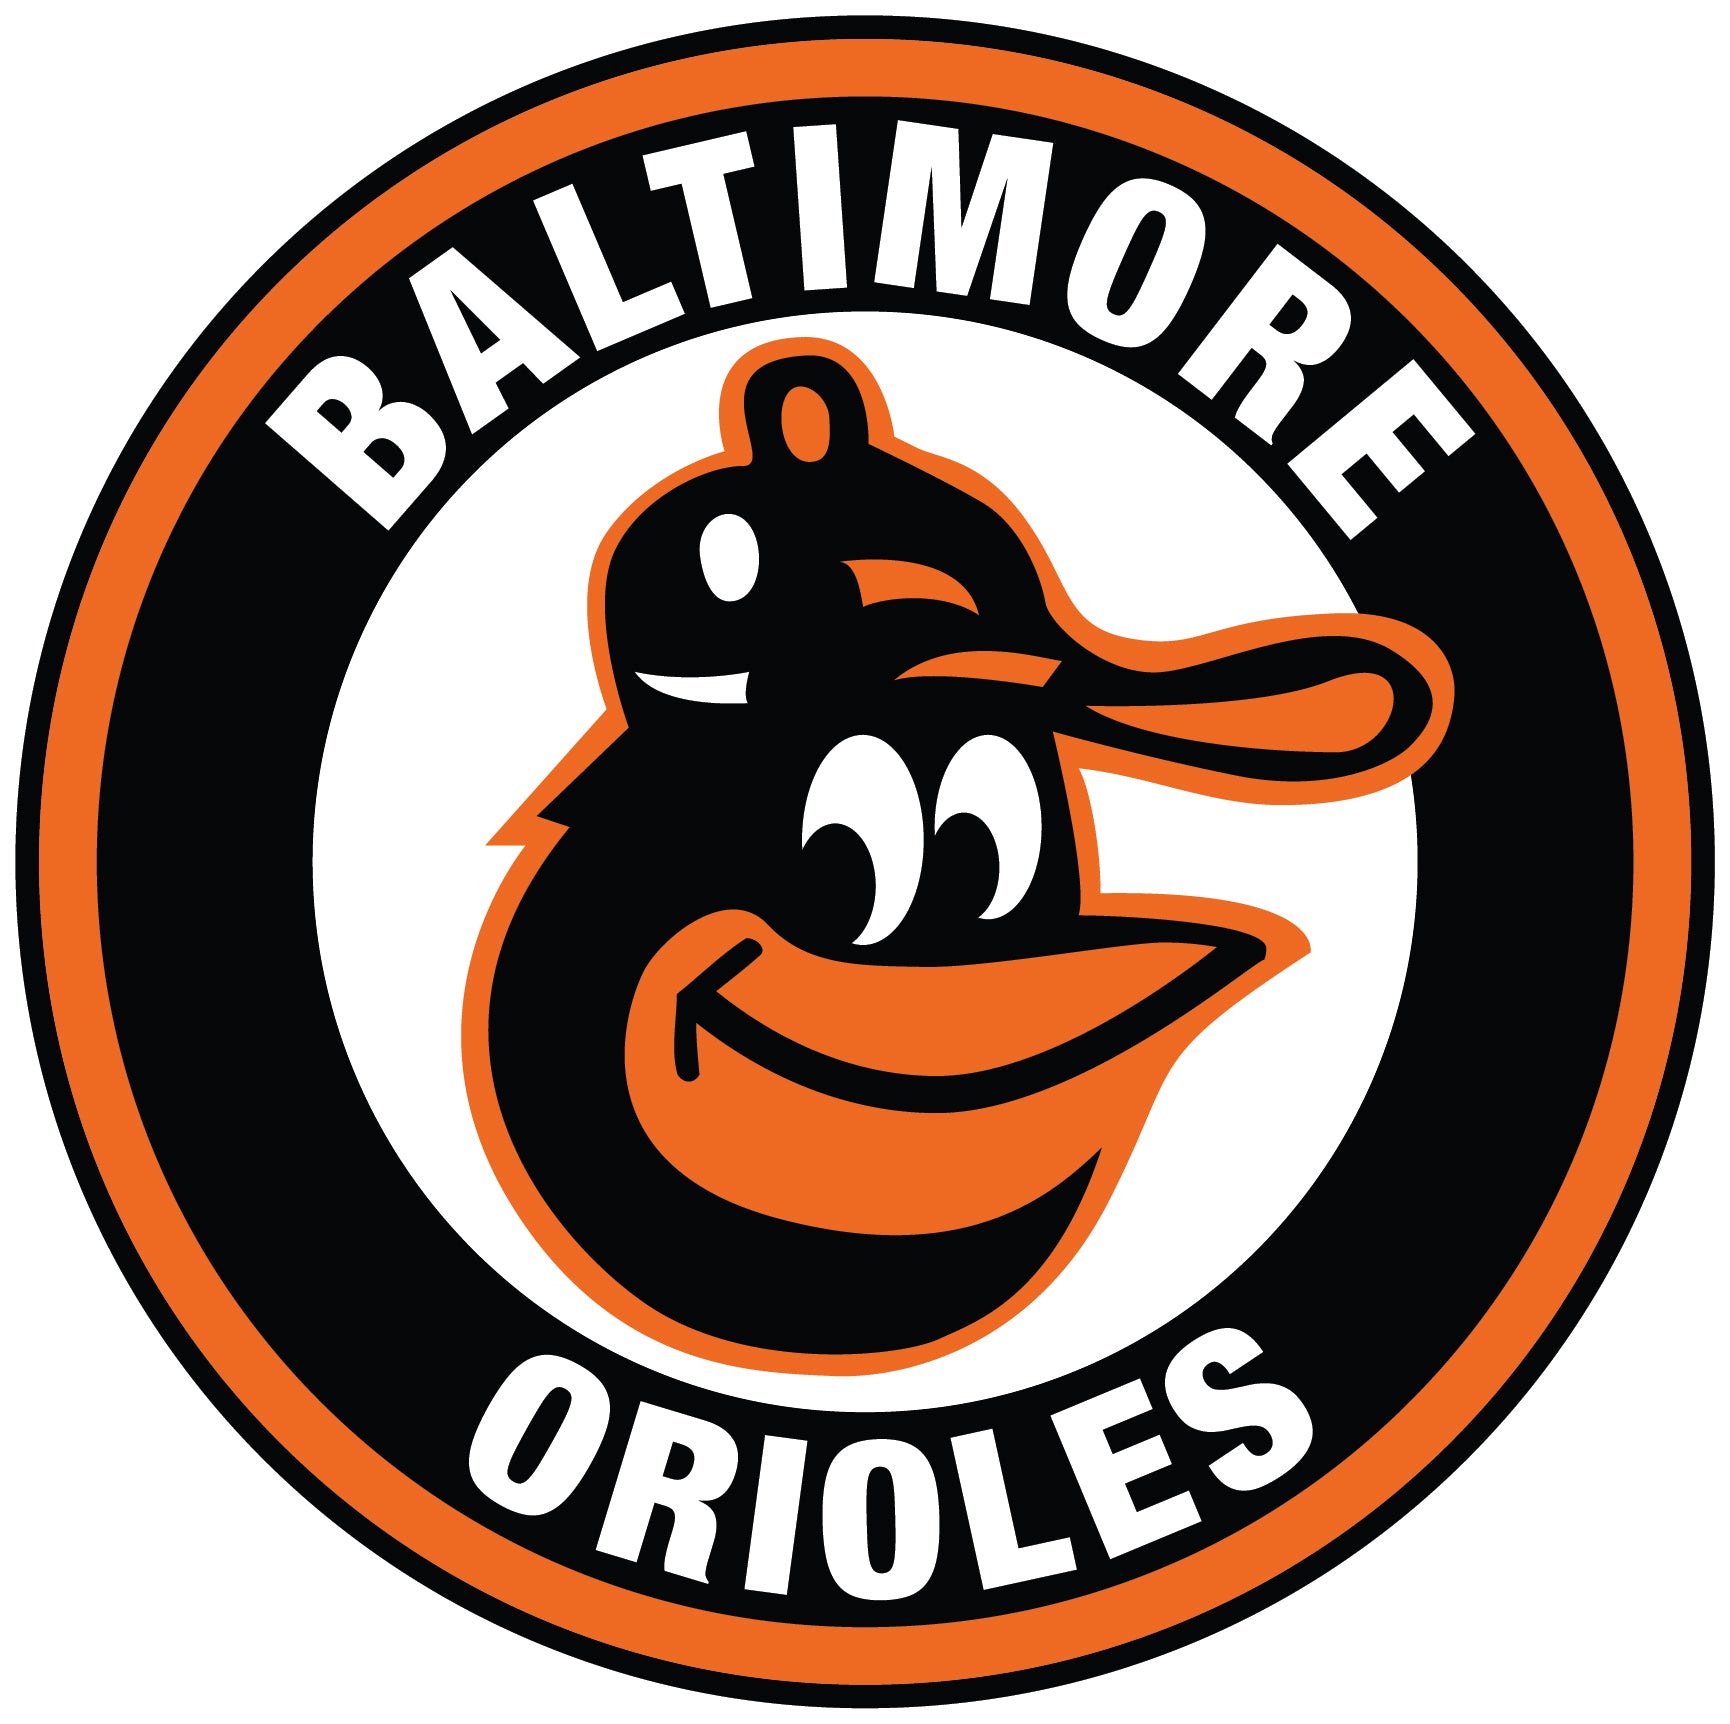 Baltimore Orioles text logo Distressed Vintage logo T-shirt 6 Sizes S